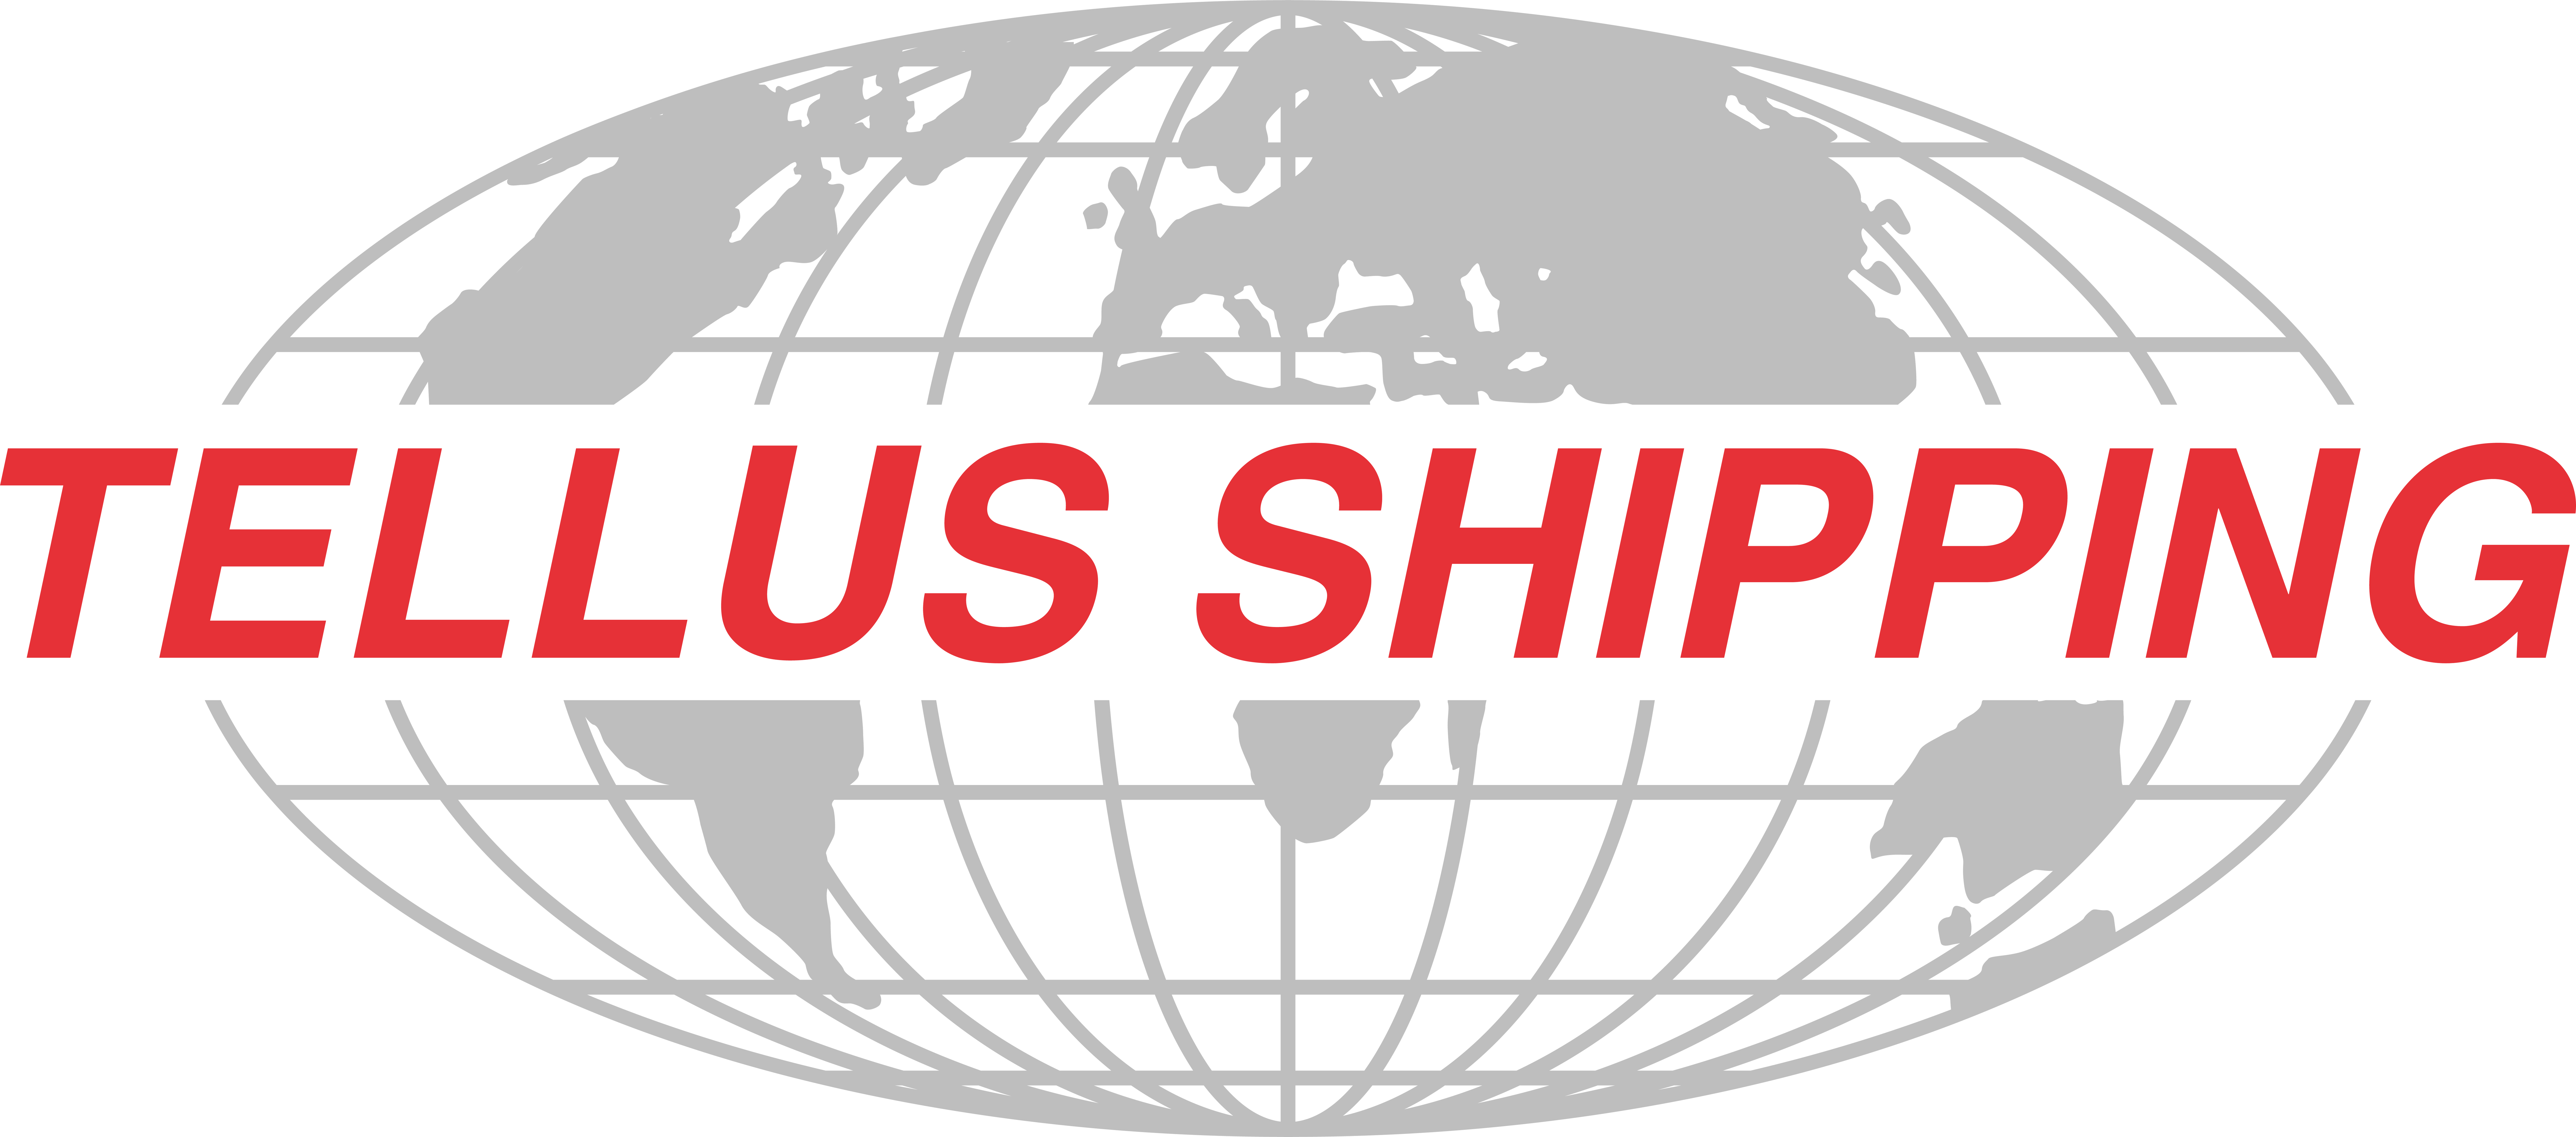 Tellus Shipping AB